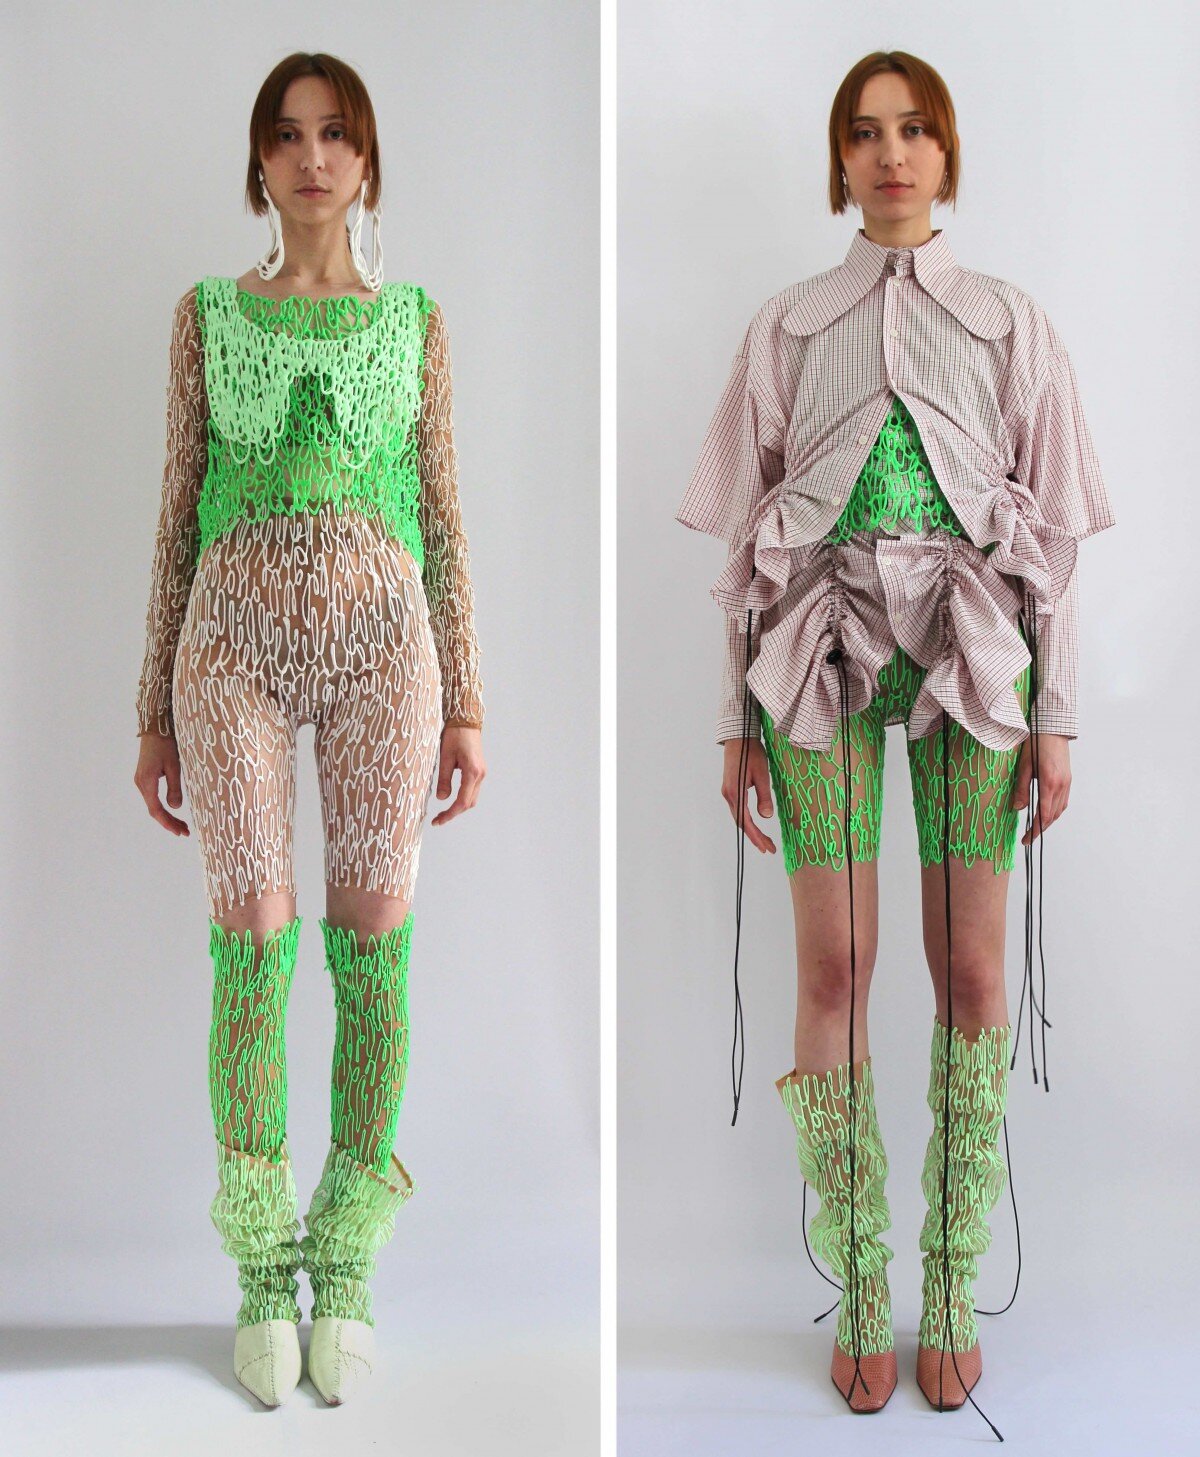 Designer Kasia Kucharska on the language of lace — CHECK-OUT